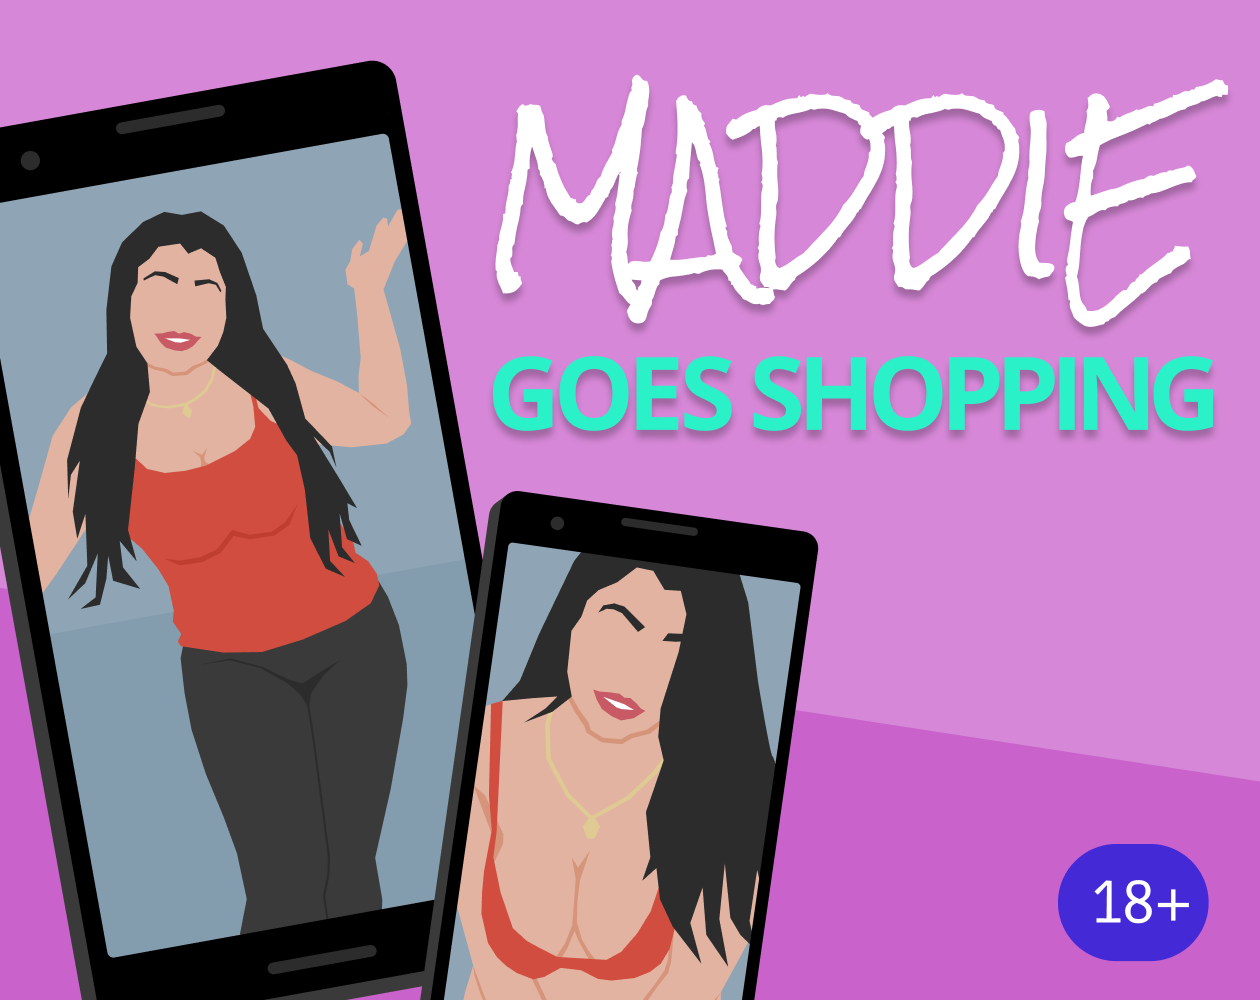 Maddie Goes Shopping v1.1.1 - free game download, reviews, mega - xGames